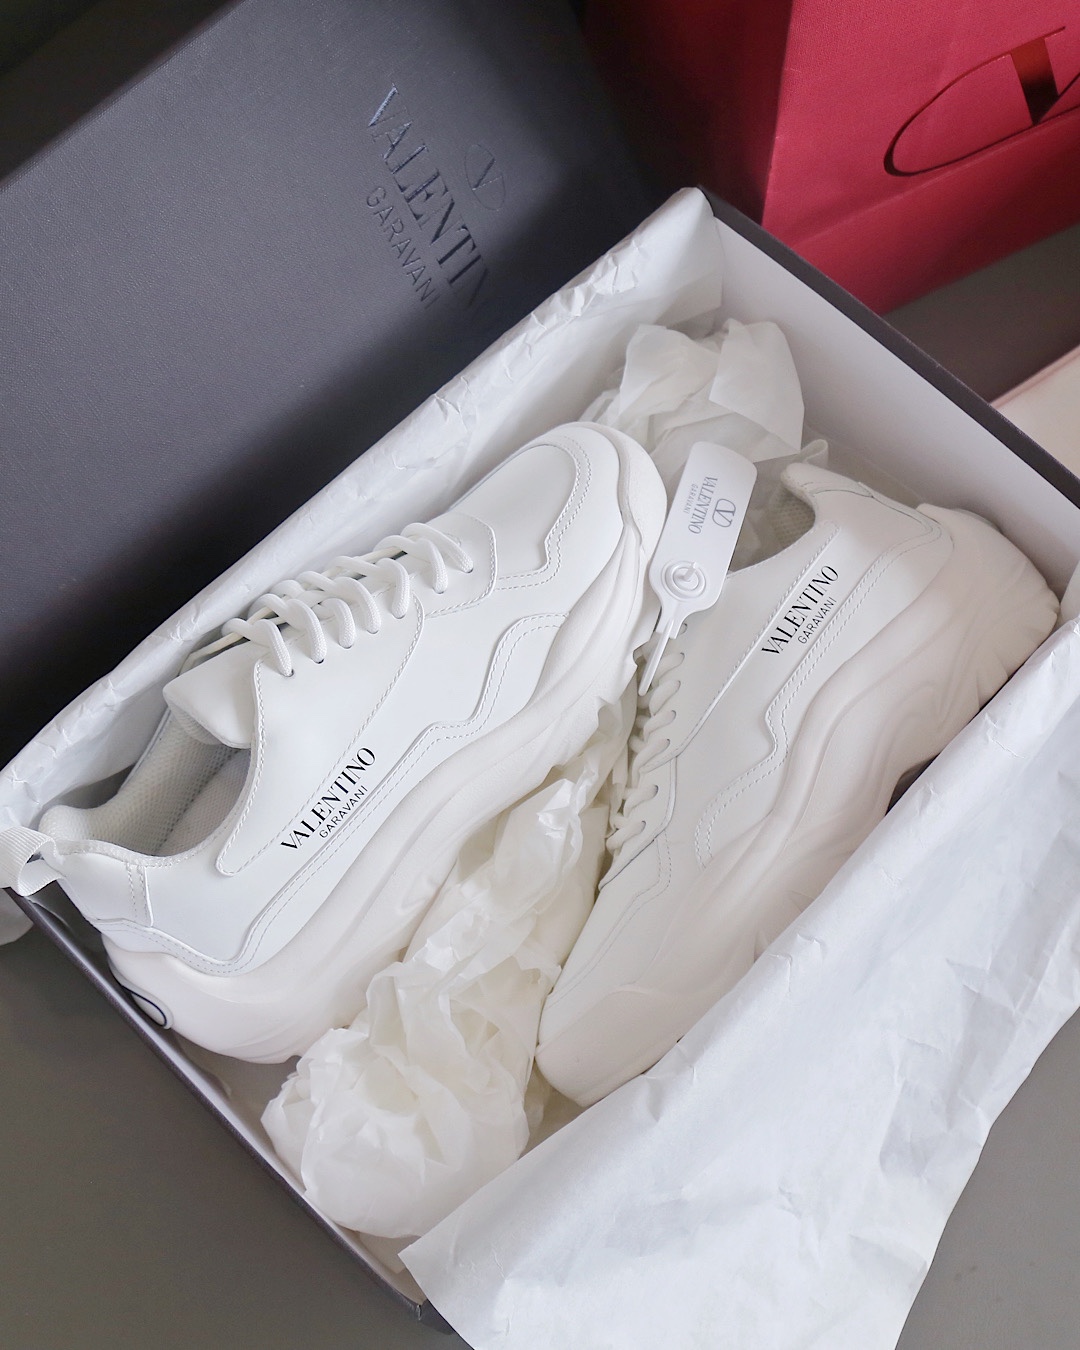 Valentino Sneaker Gumboy Calfskin in White